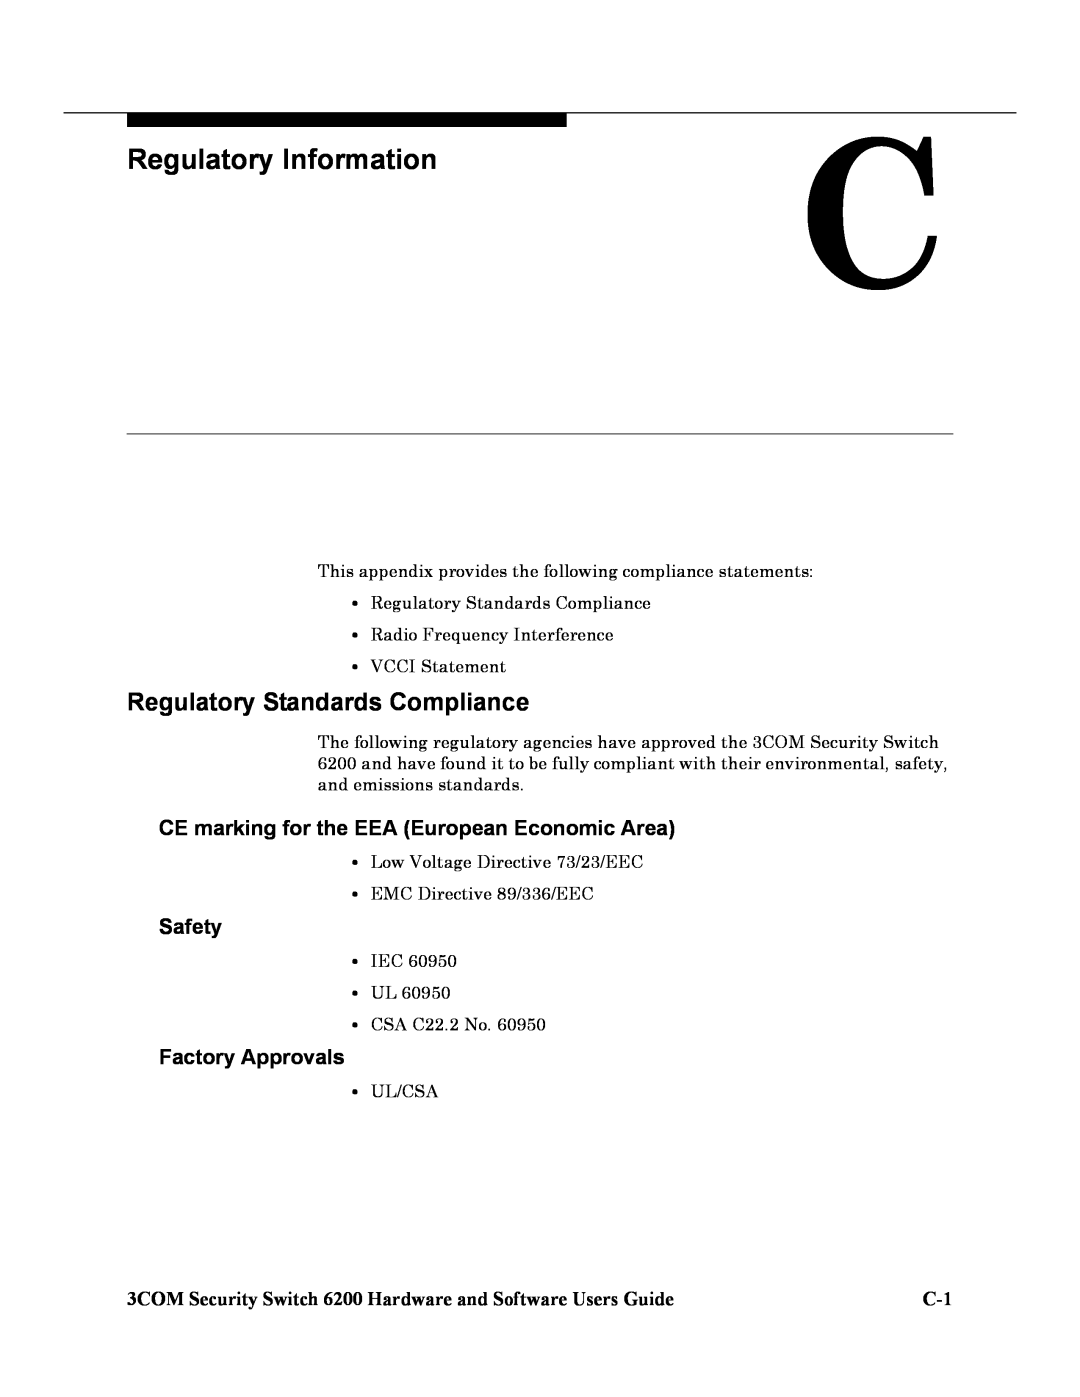 3Com 6200 Regulatory Information, Regulatory Standards Compliance, CE marking for the EEA European Economic Area, Safety 